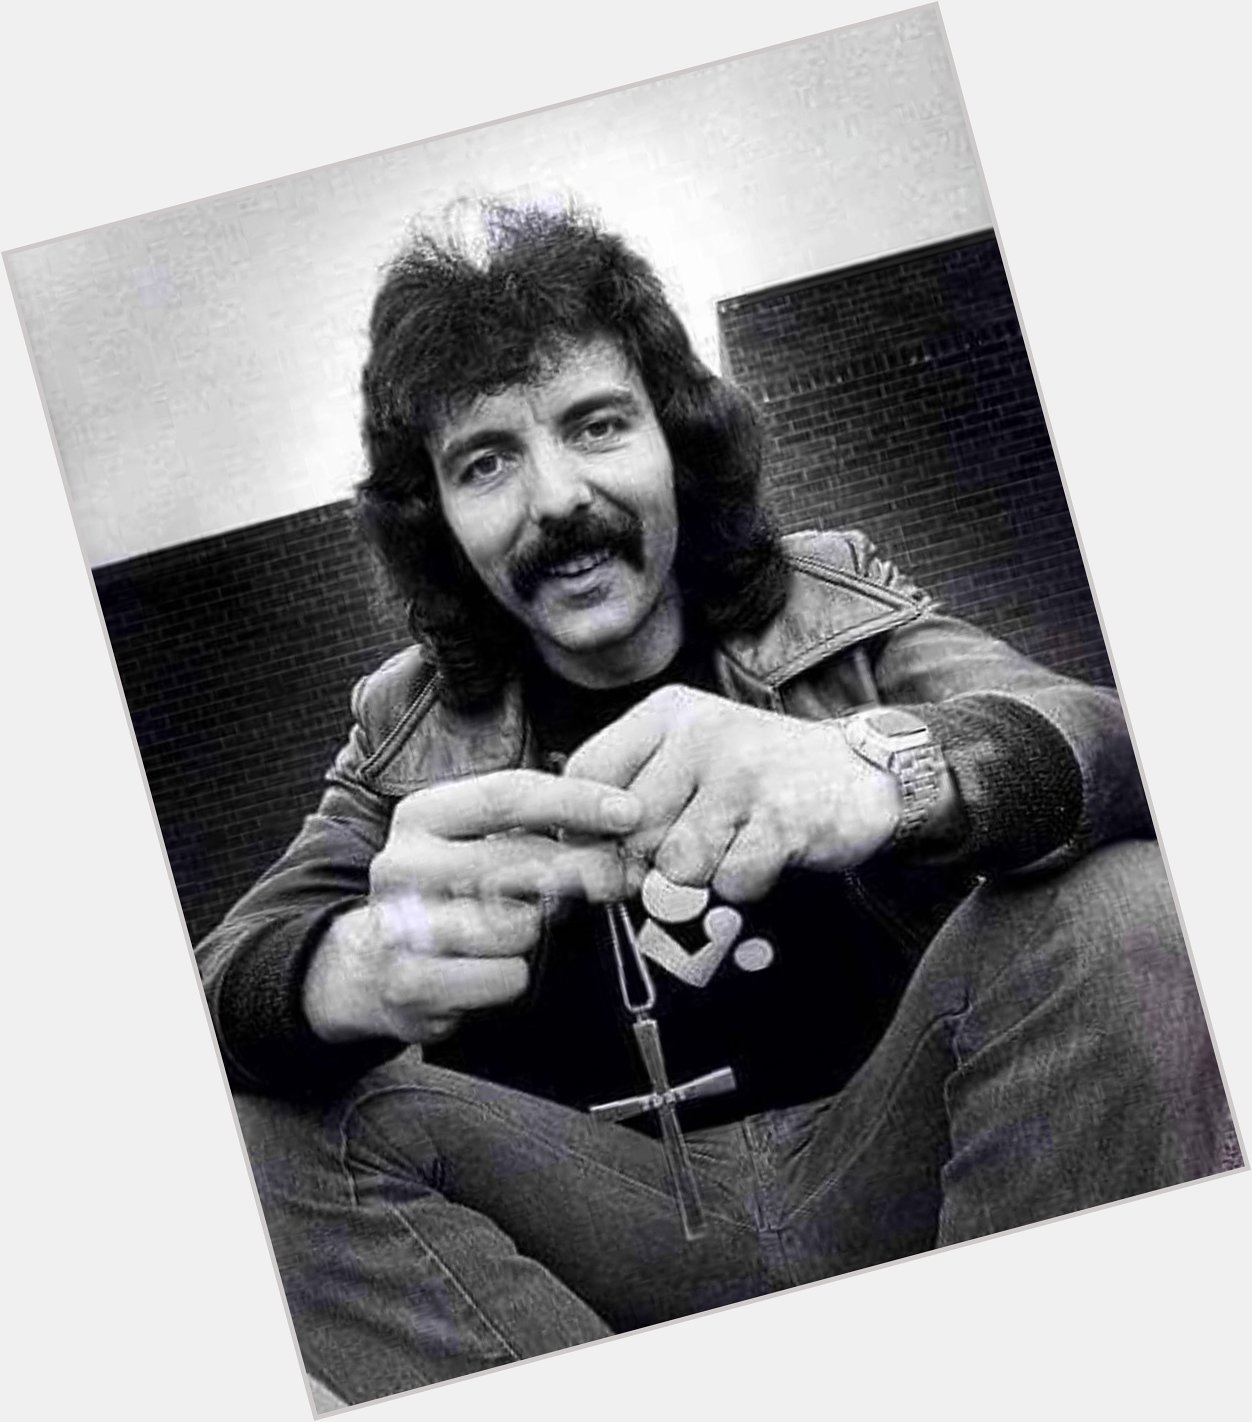 Happy 73rd birthday Tony Iommi! Born on this day in 1948 in Handsworth, Birmingham. 